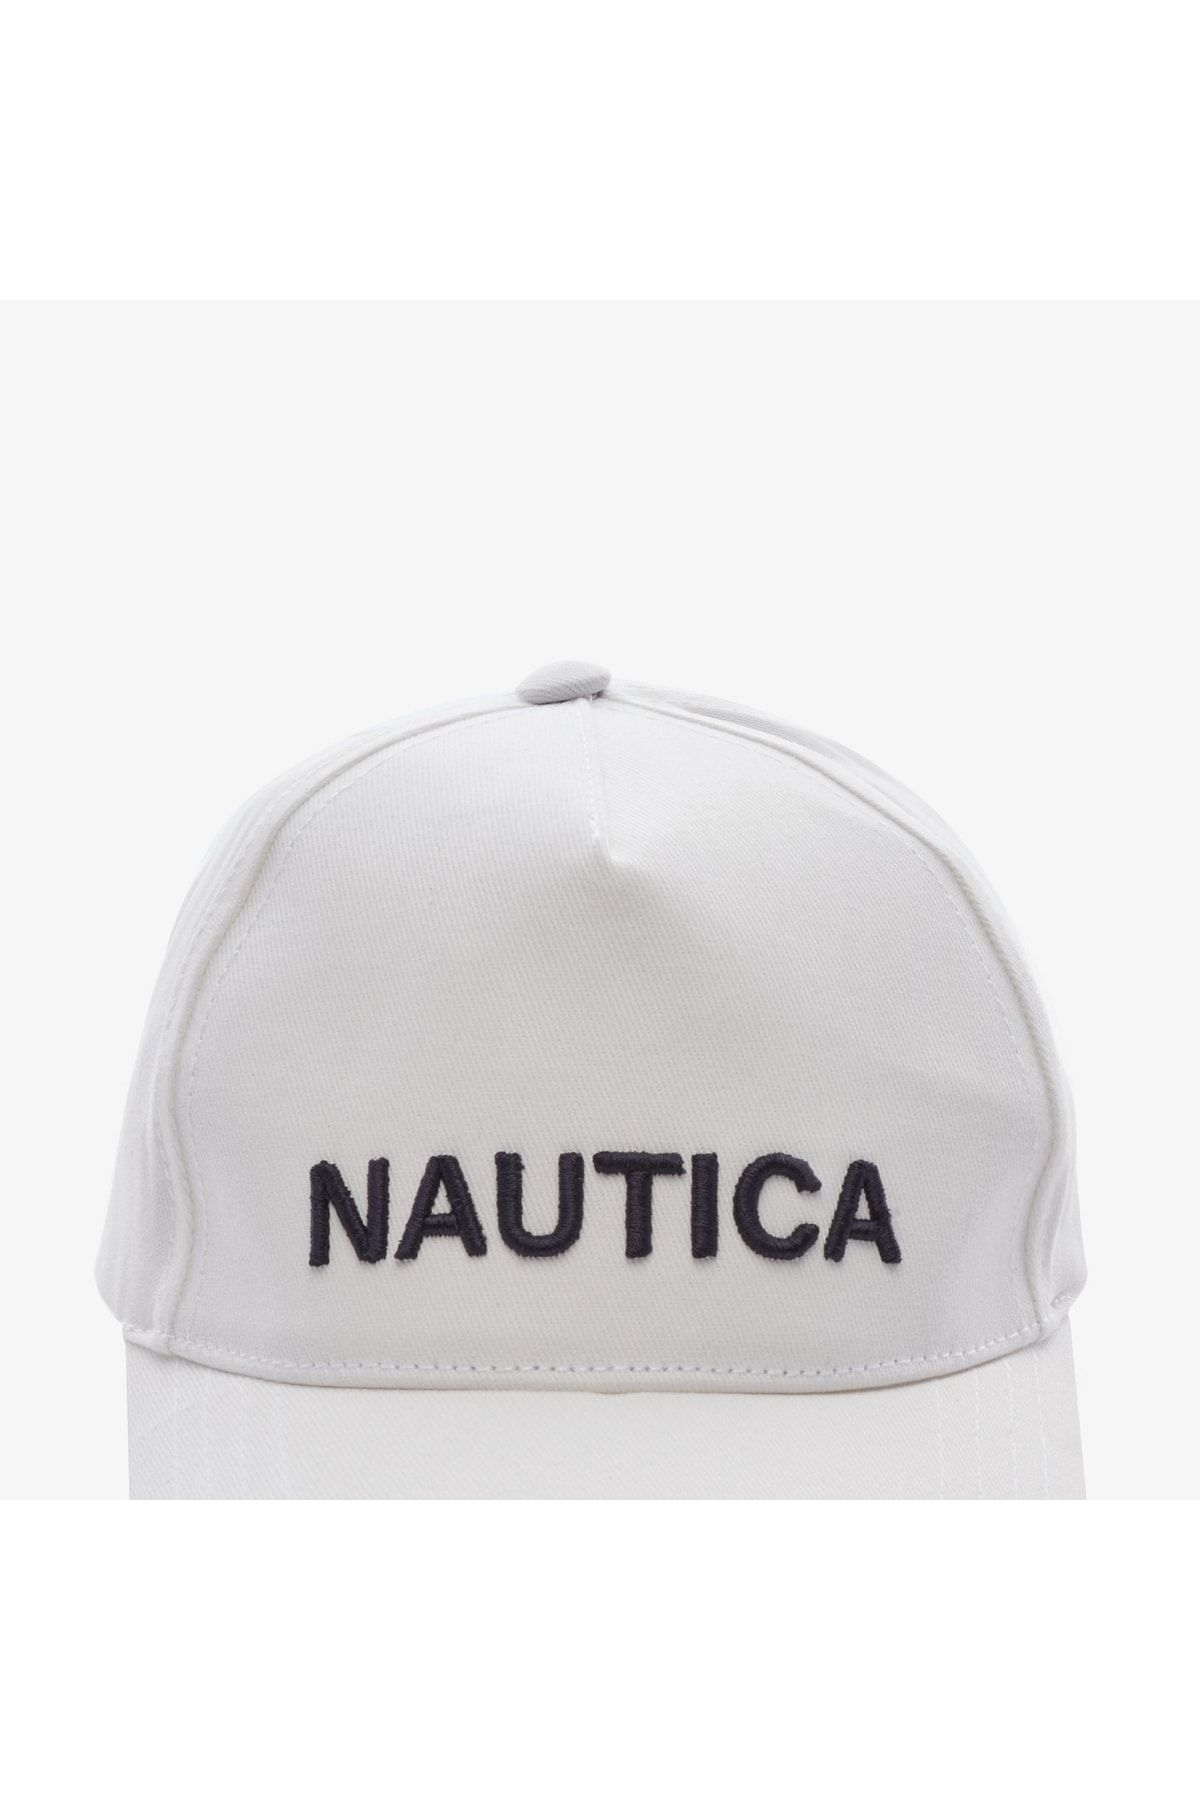 Nautica کلاه سفید بچه های Nauca